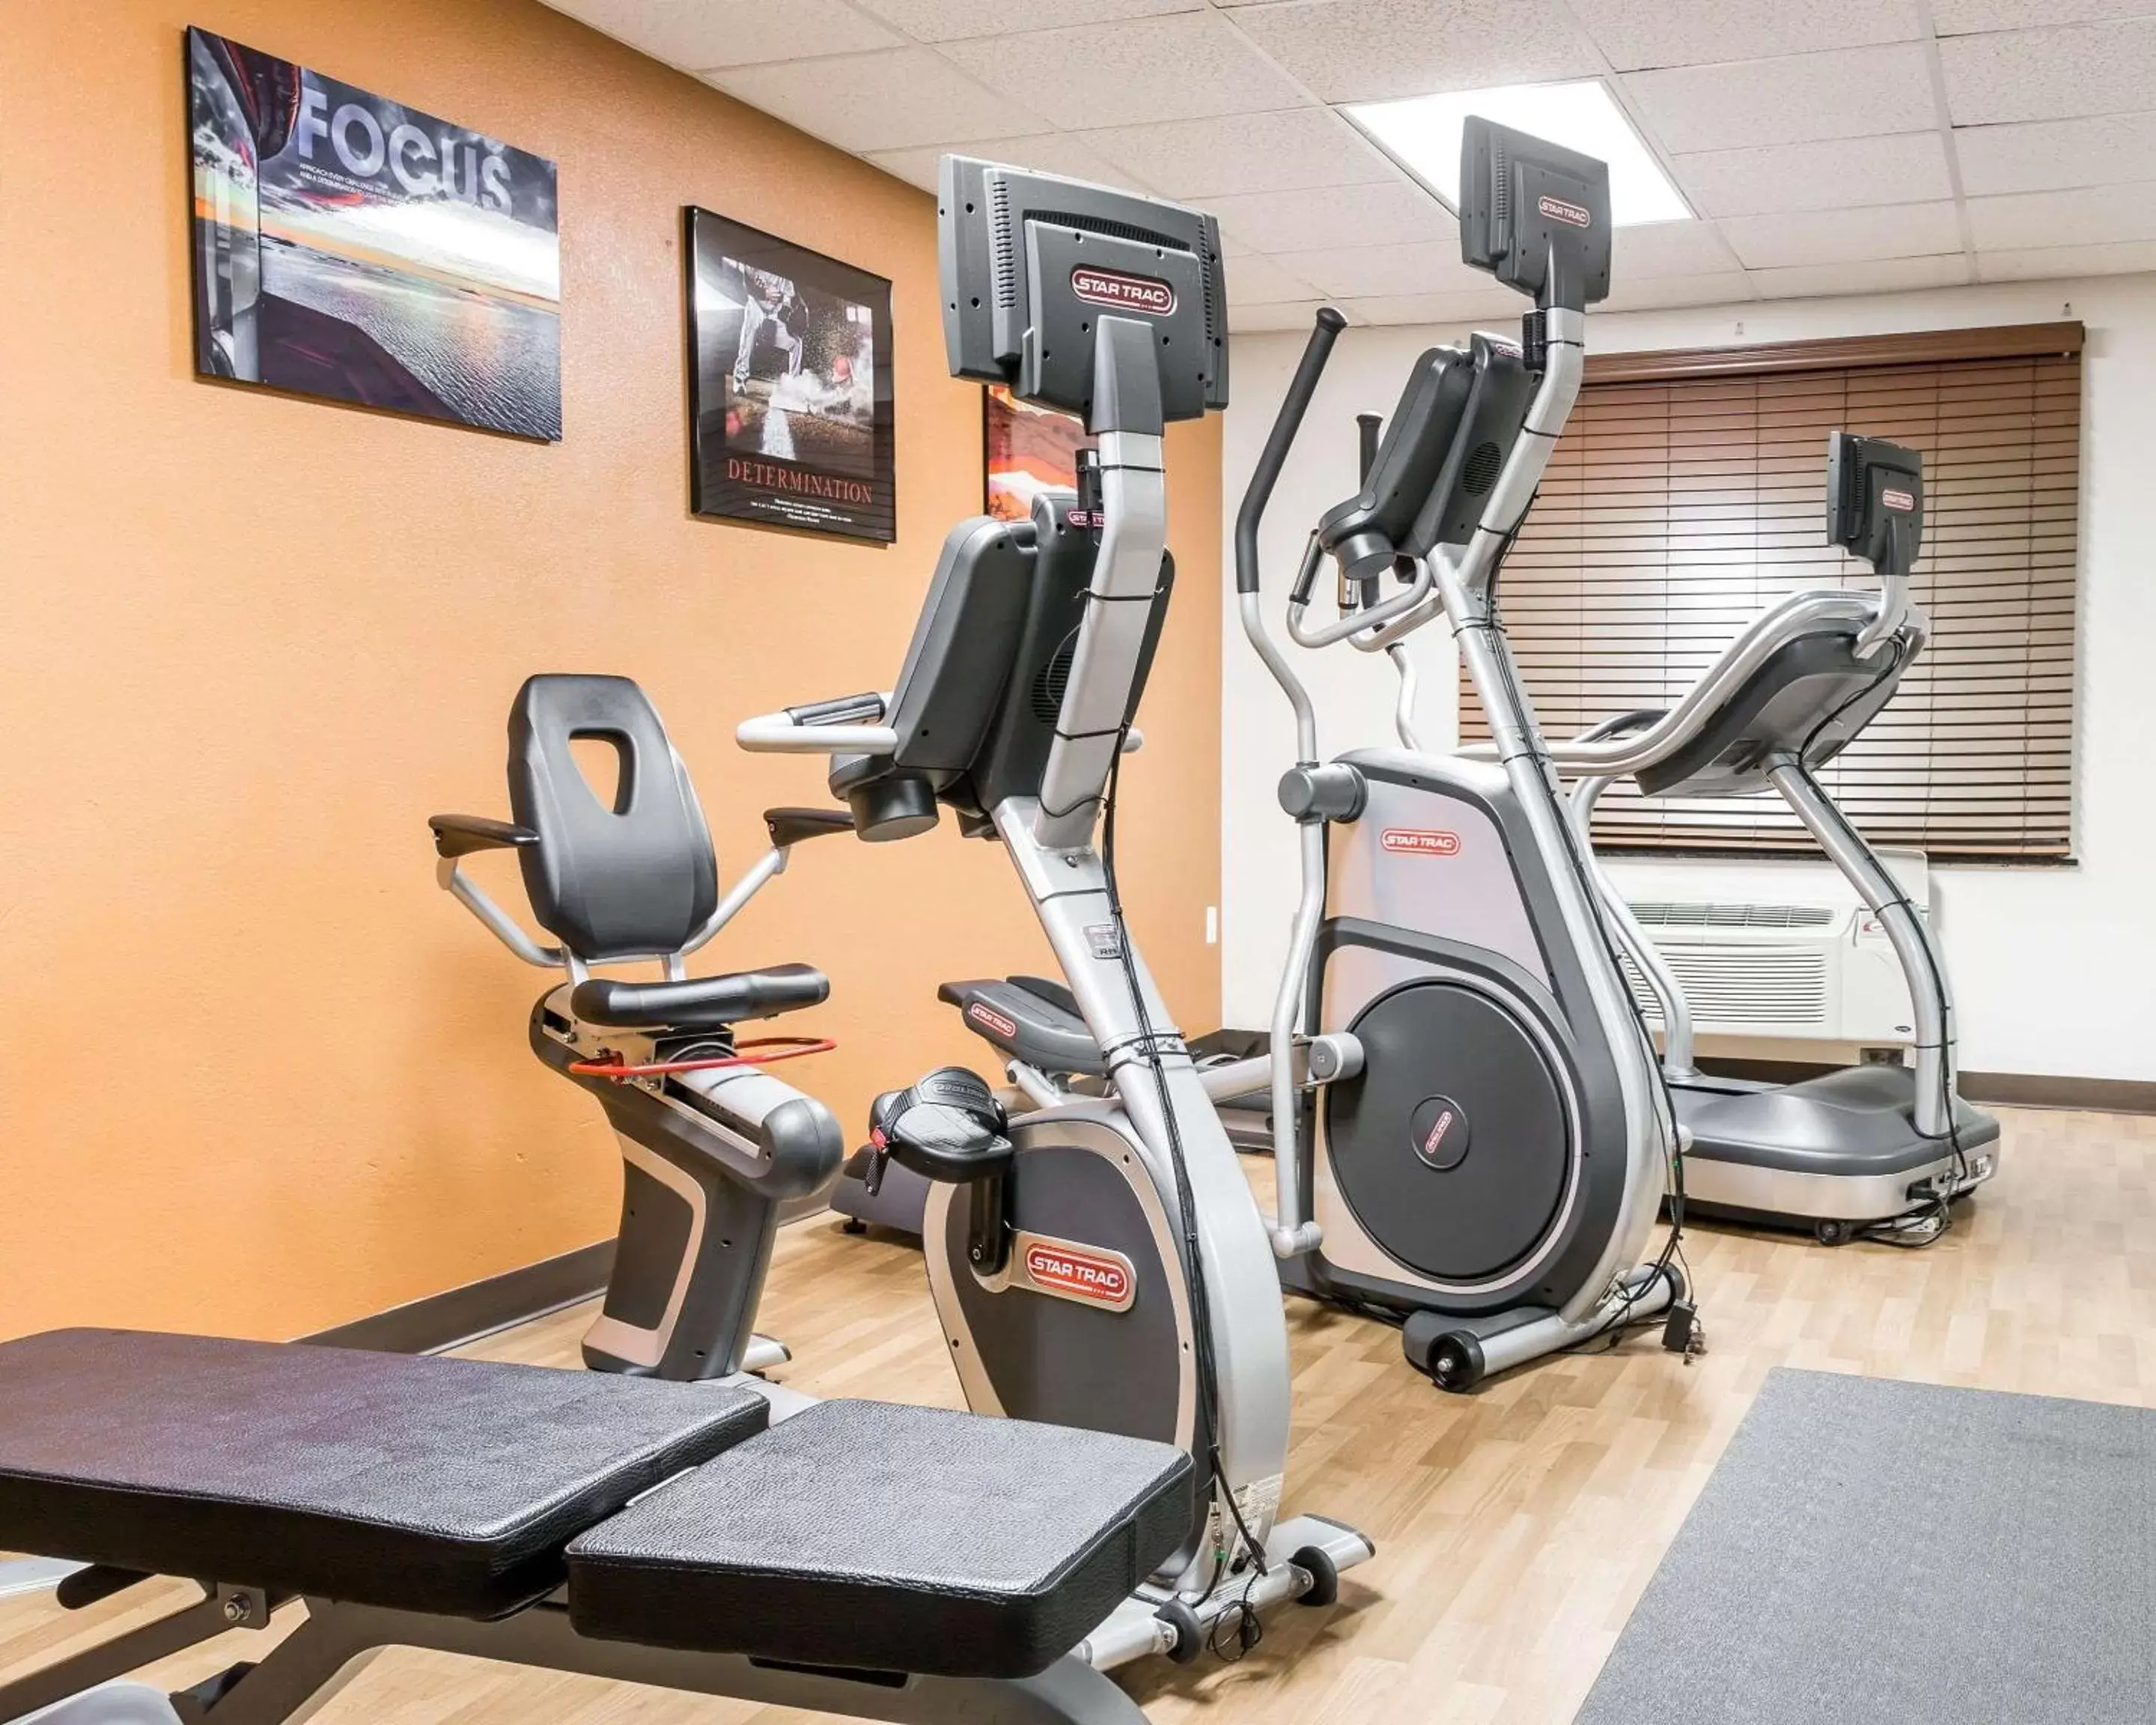 Fitness centre/facilities, Fitness Center/Facilities in Comfort Inn Metro Airport Romulus